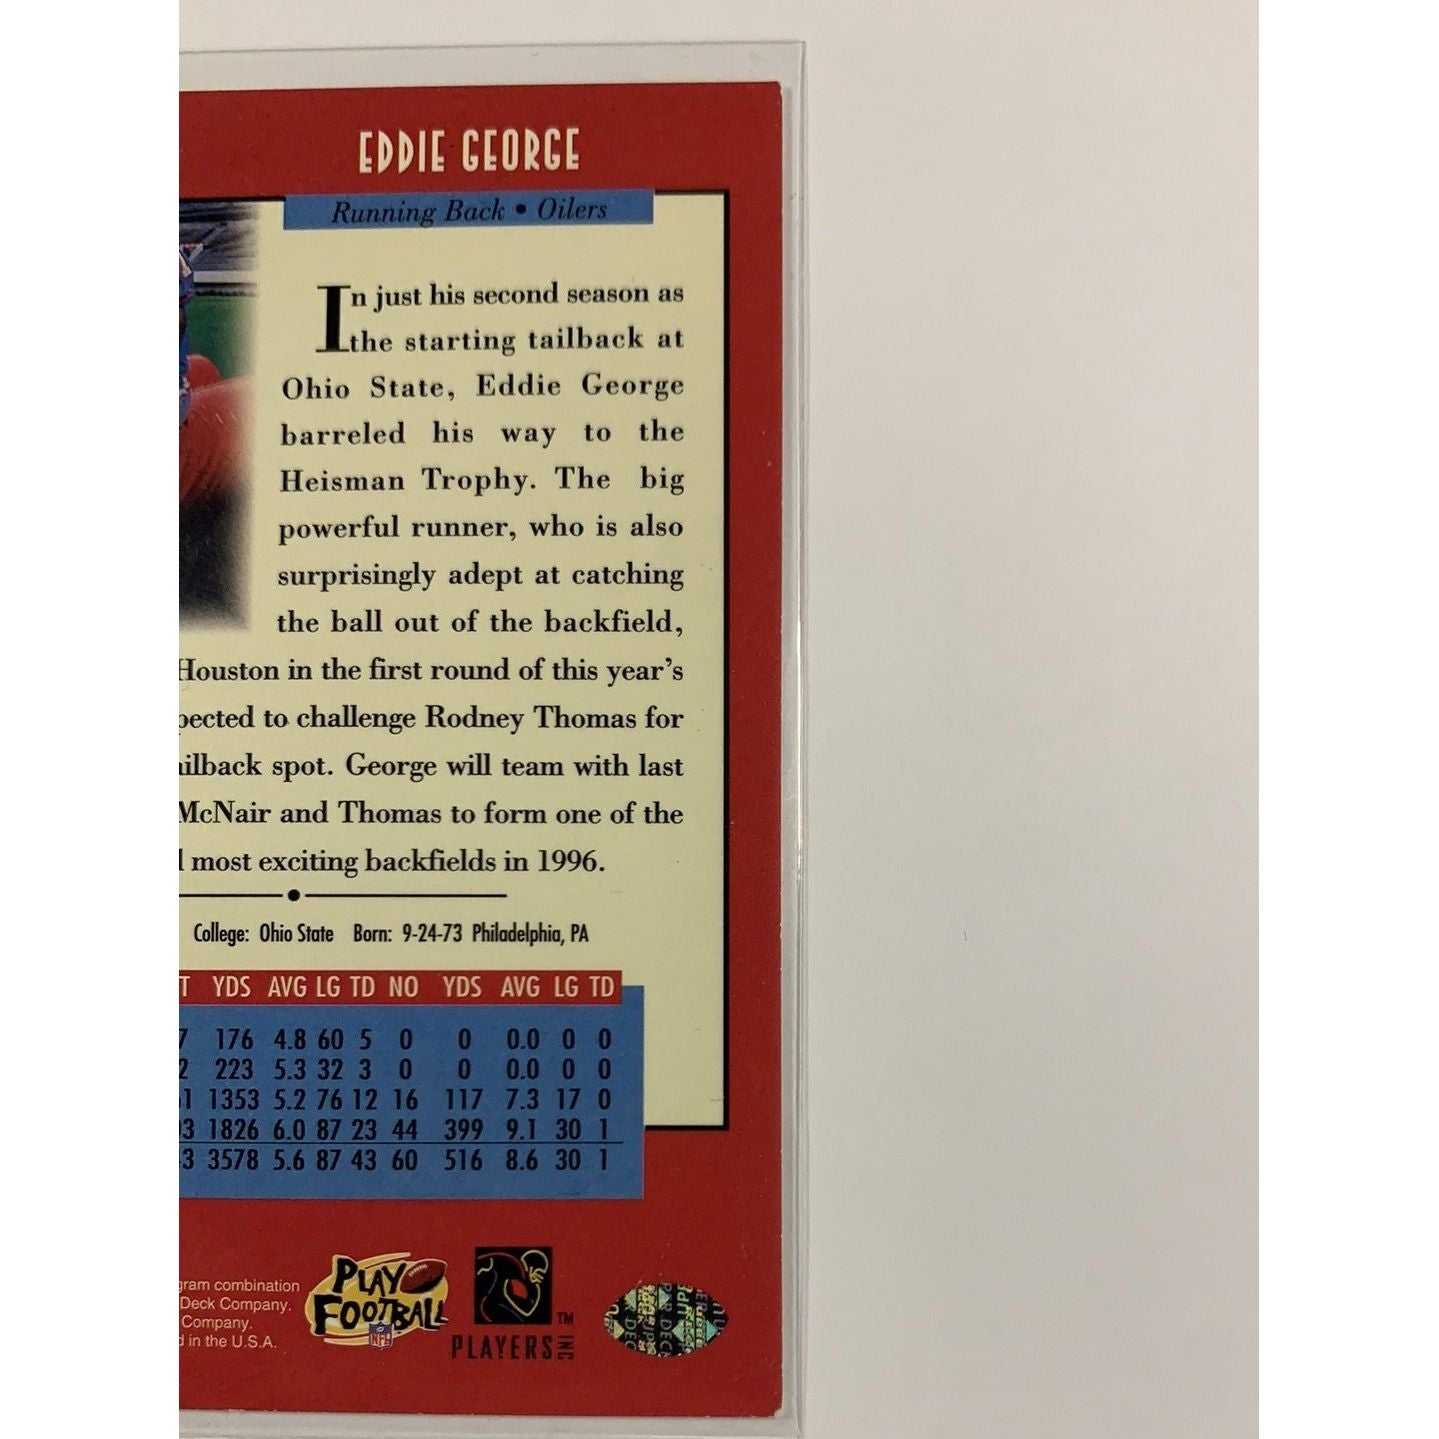  1996 Upper Deck Eddie George Star Rookie  Local Legends Cards & Collectibles